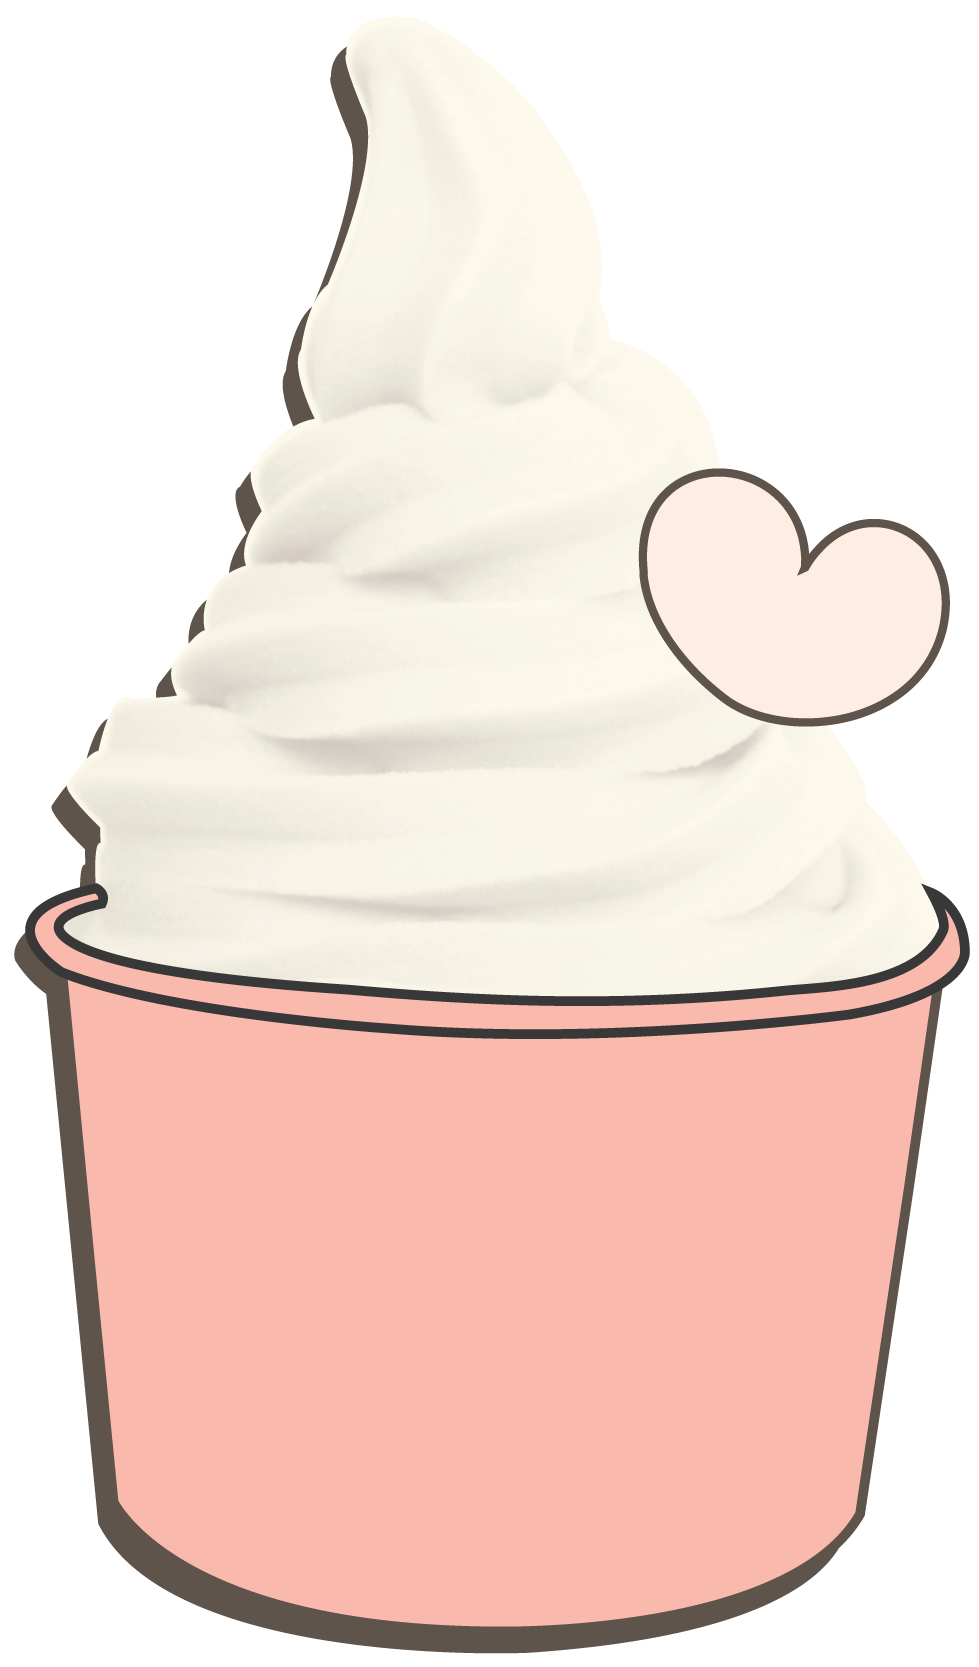 Sweetberry frozen gelato crepes. Yogurt clipart yogurt cup